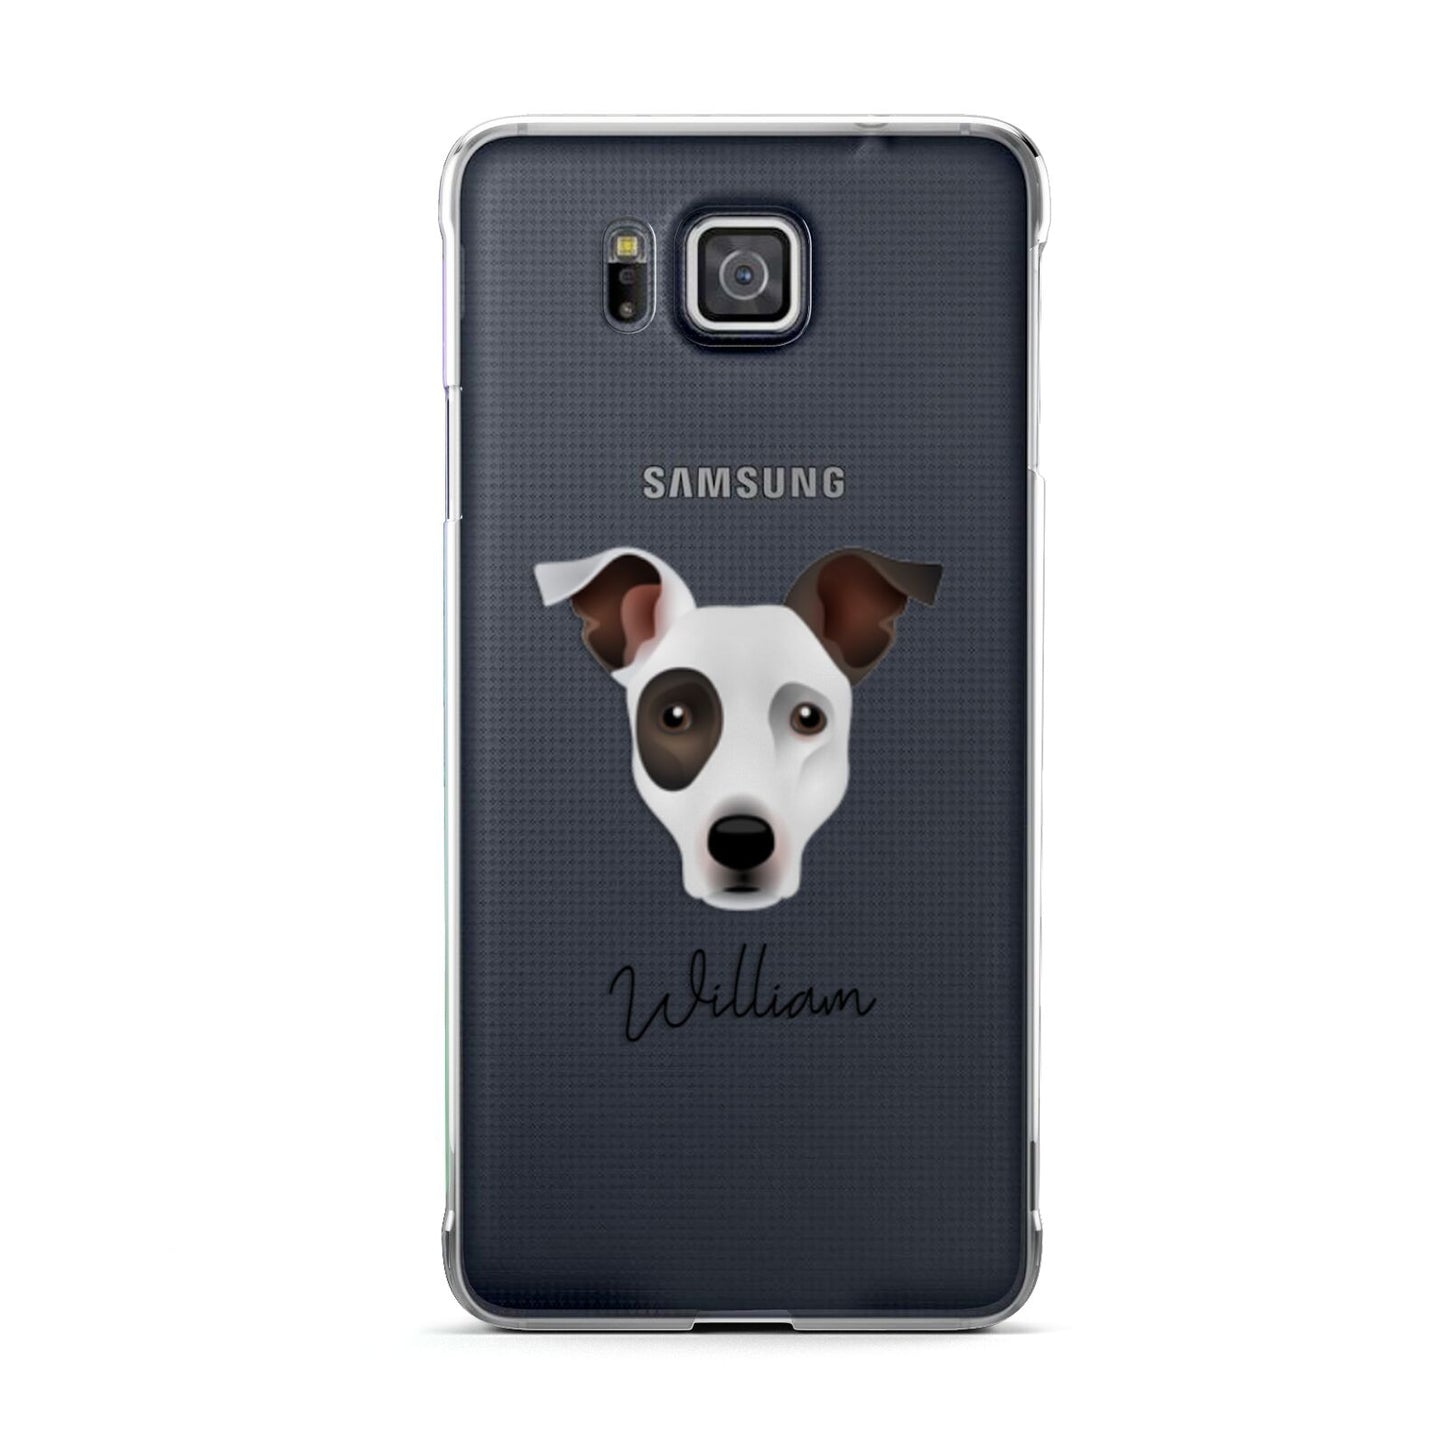 Staffy Jack Personalised Samsung Galaxy Alpha Case